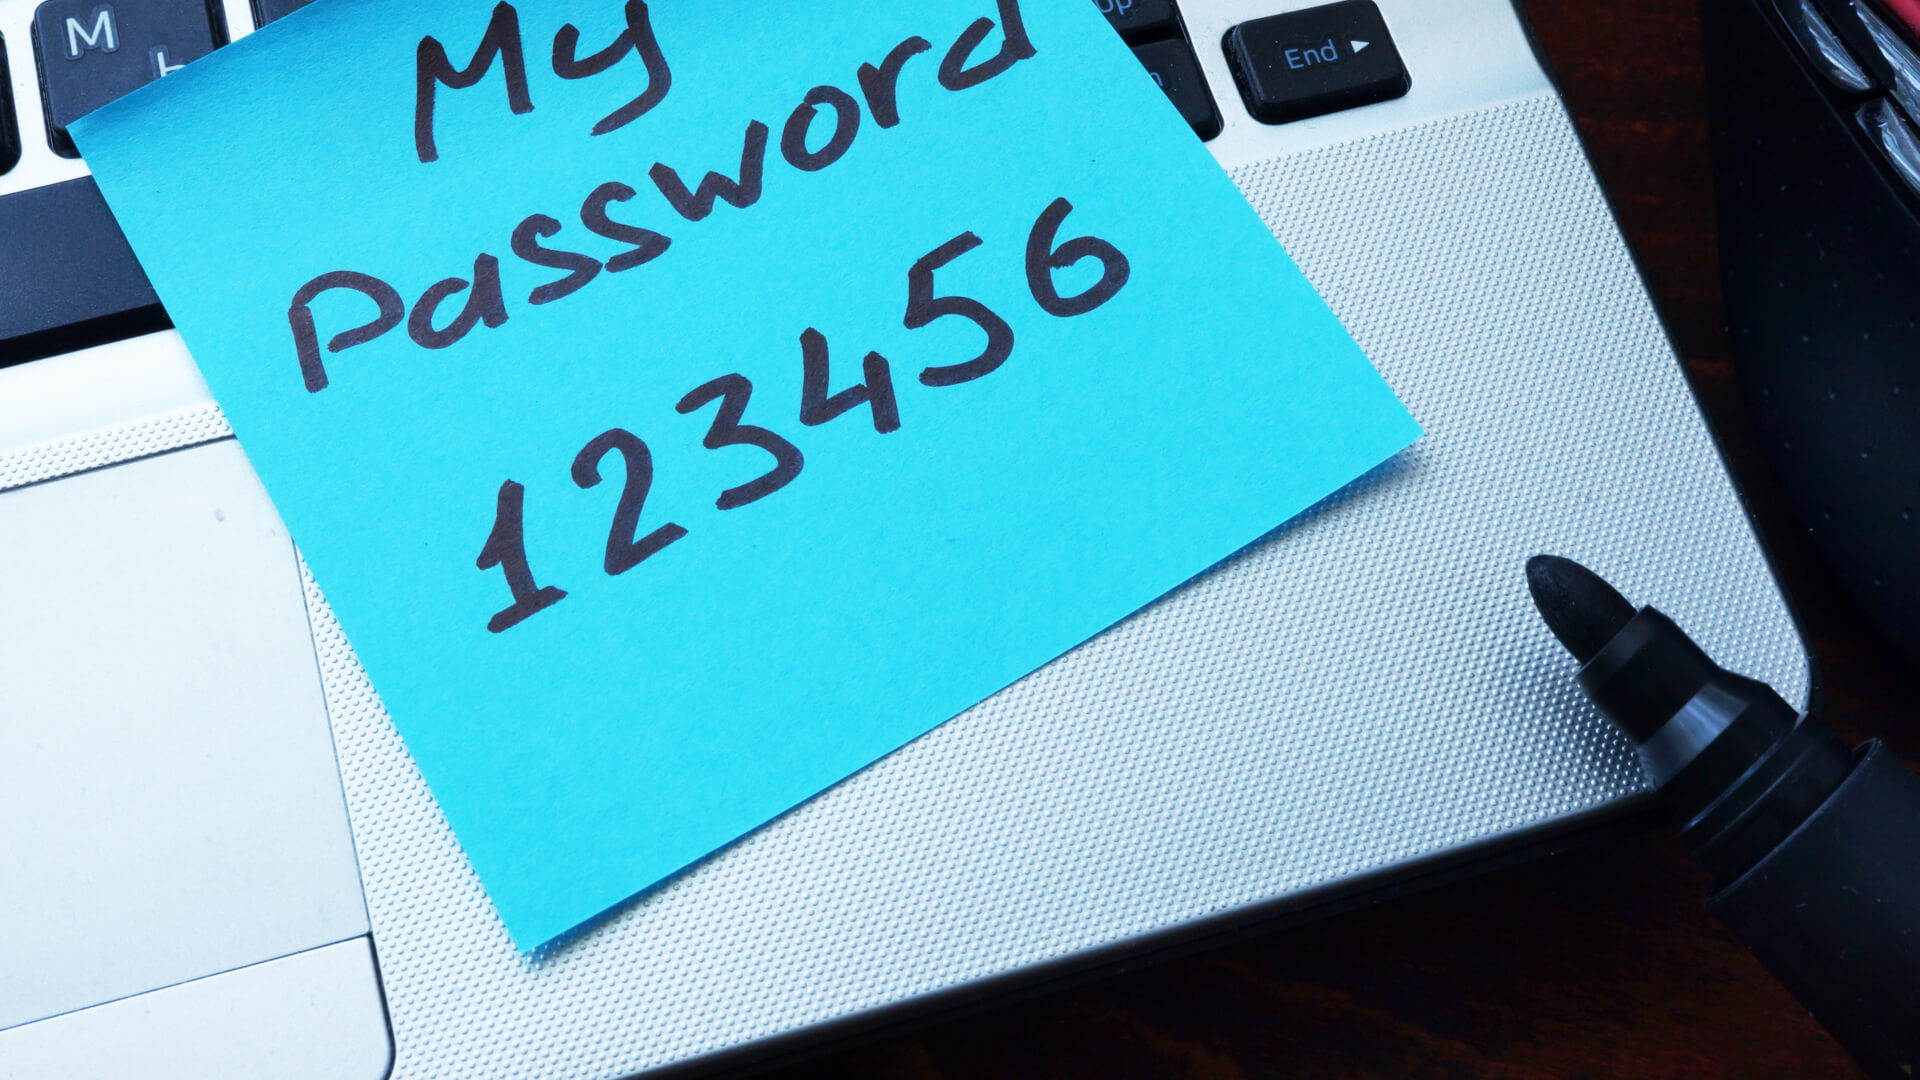 worst password list